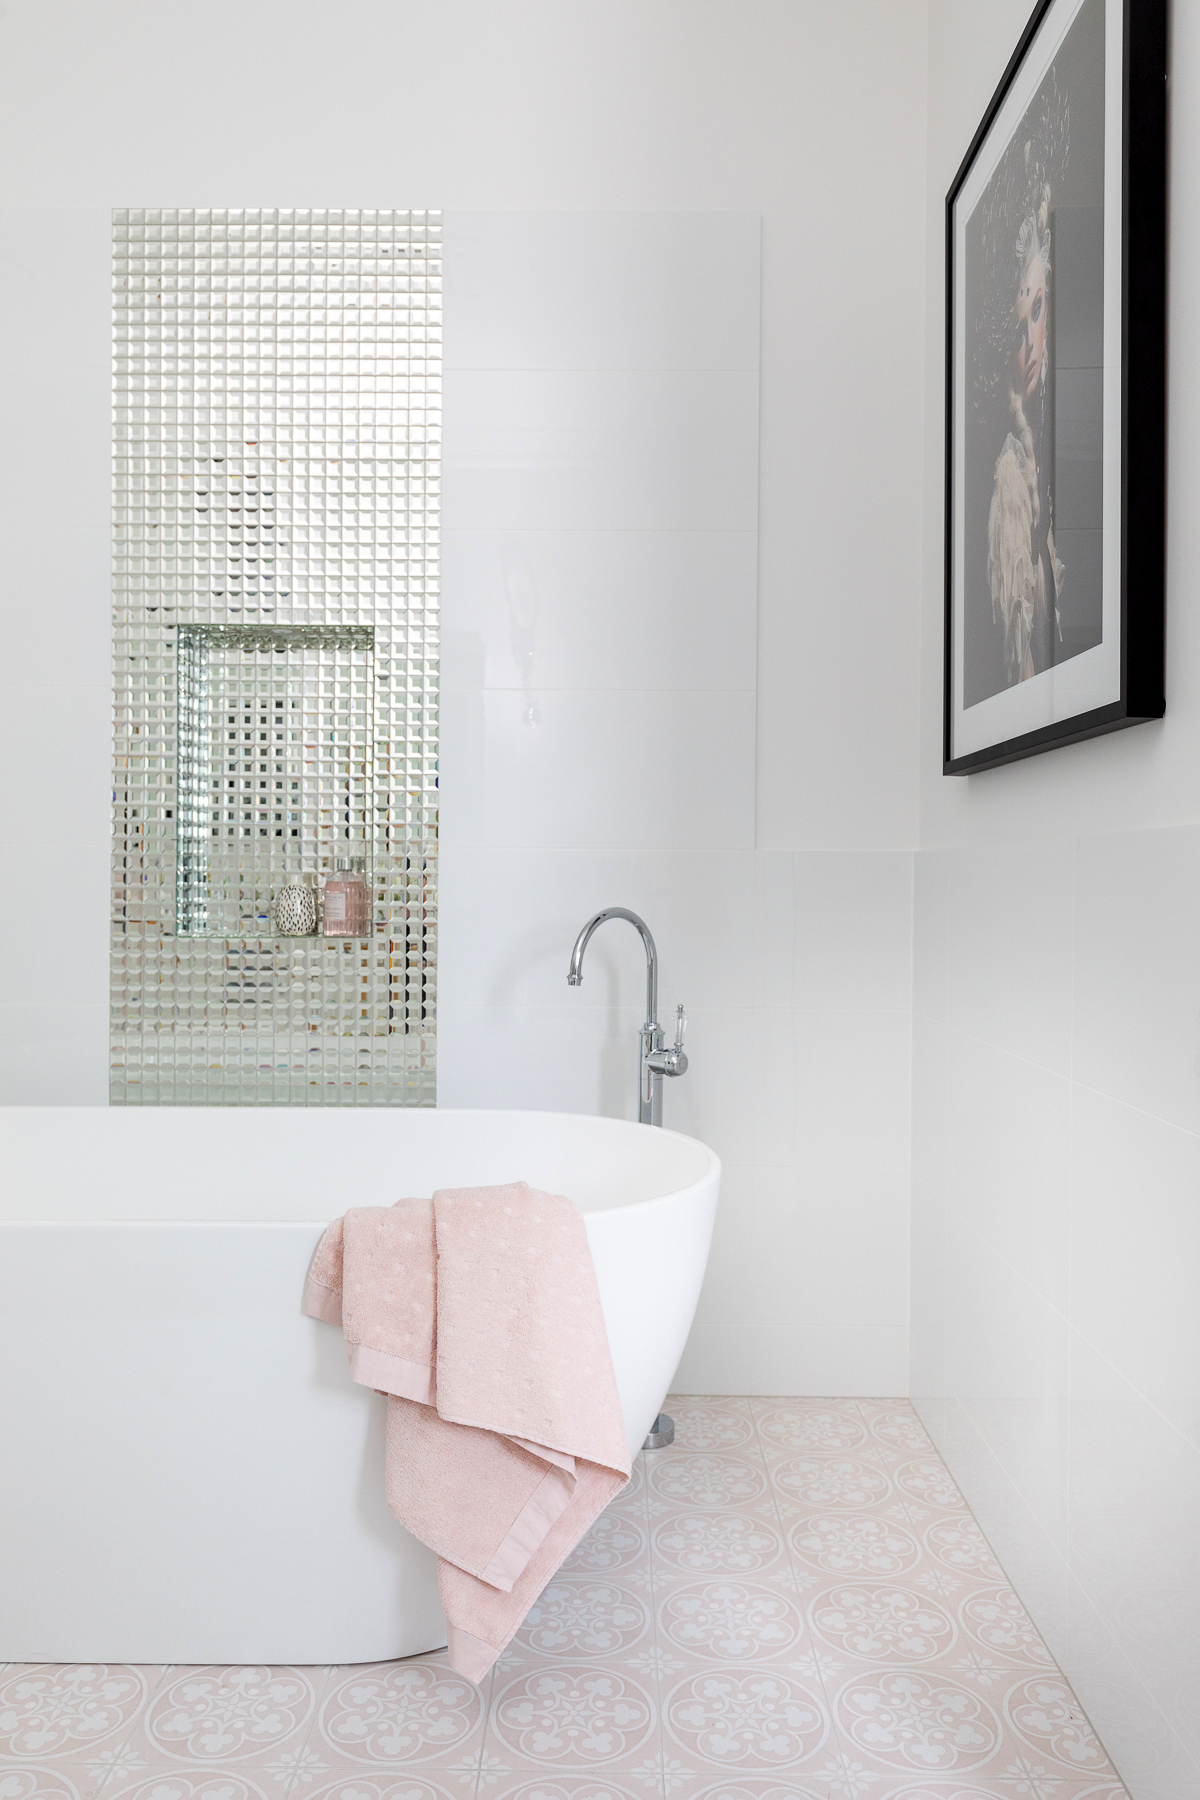 Clayfield bathroom ensuite free standing bath glass mosaic feature tiles niche Brodware gooseneck bath mixer